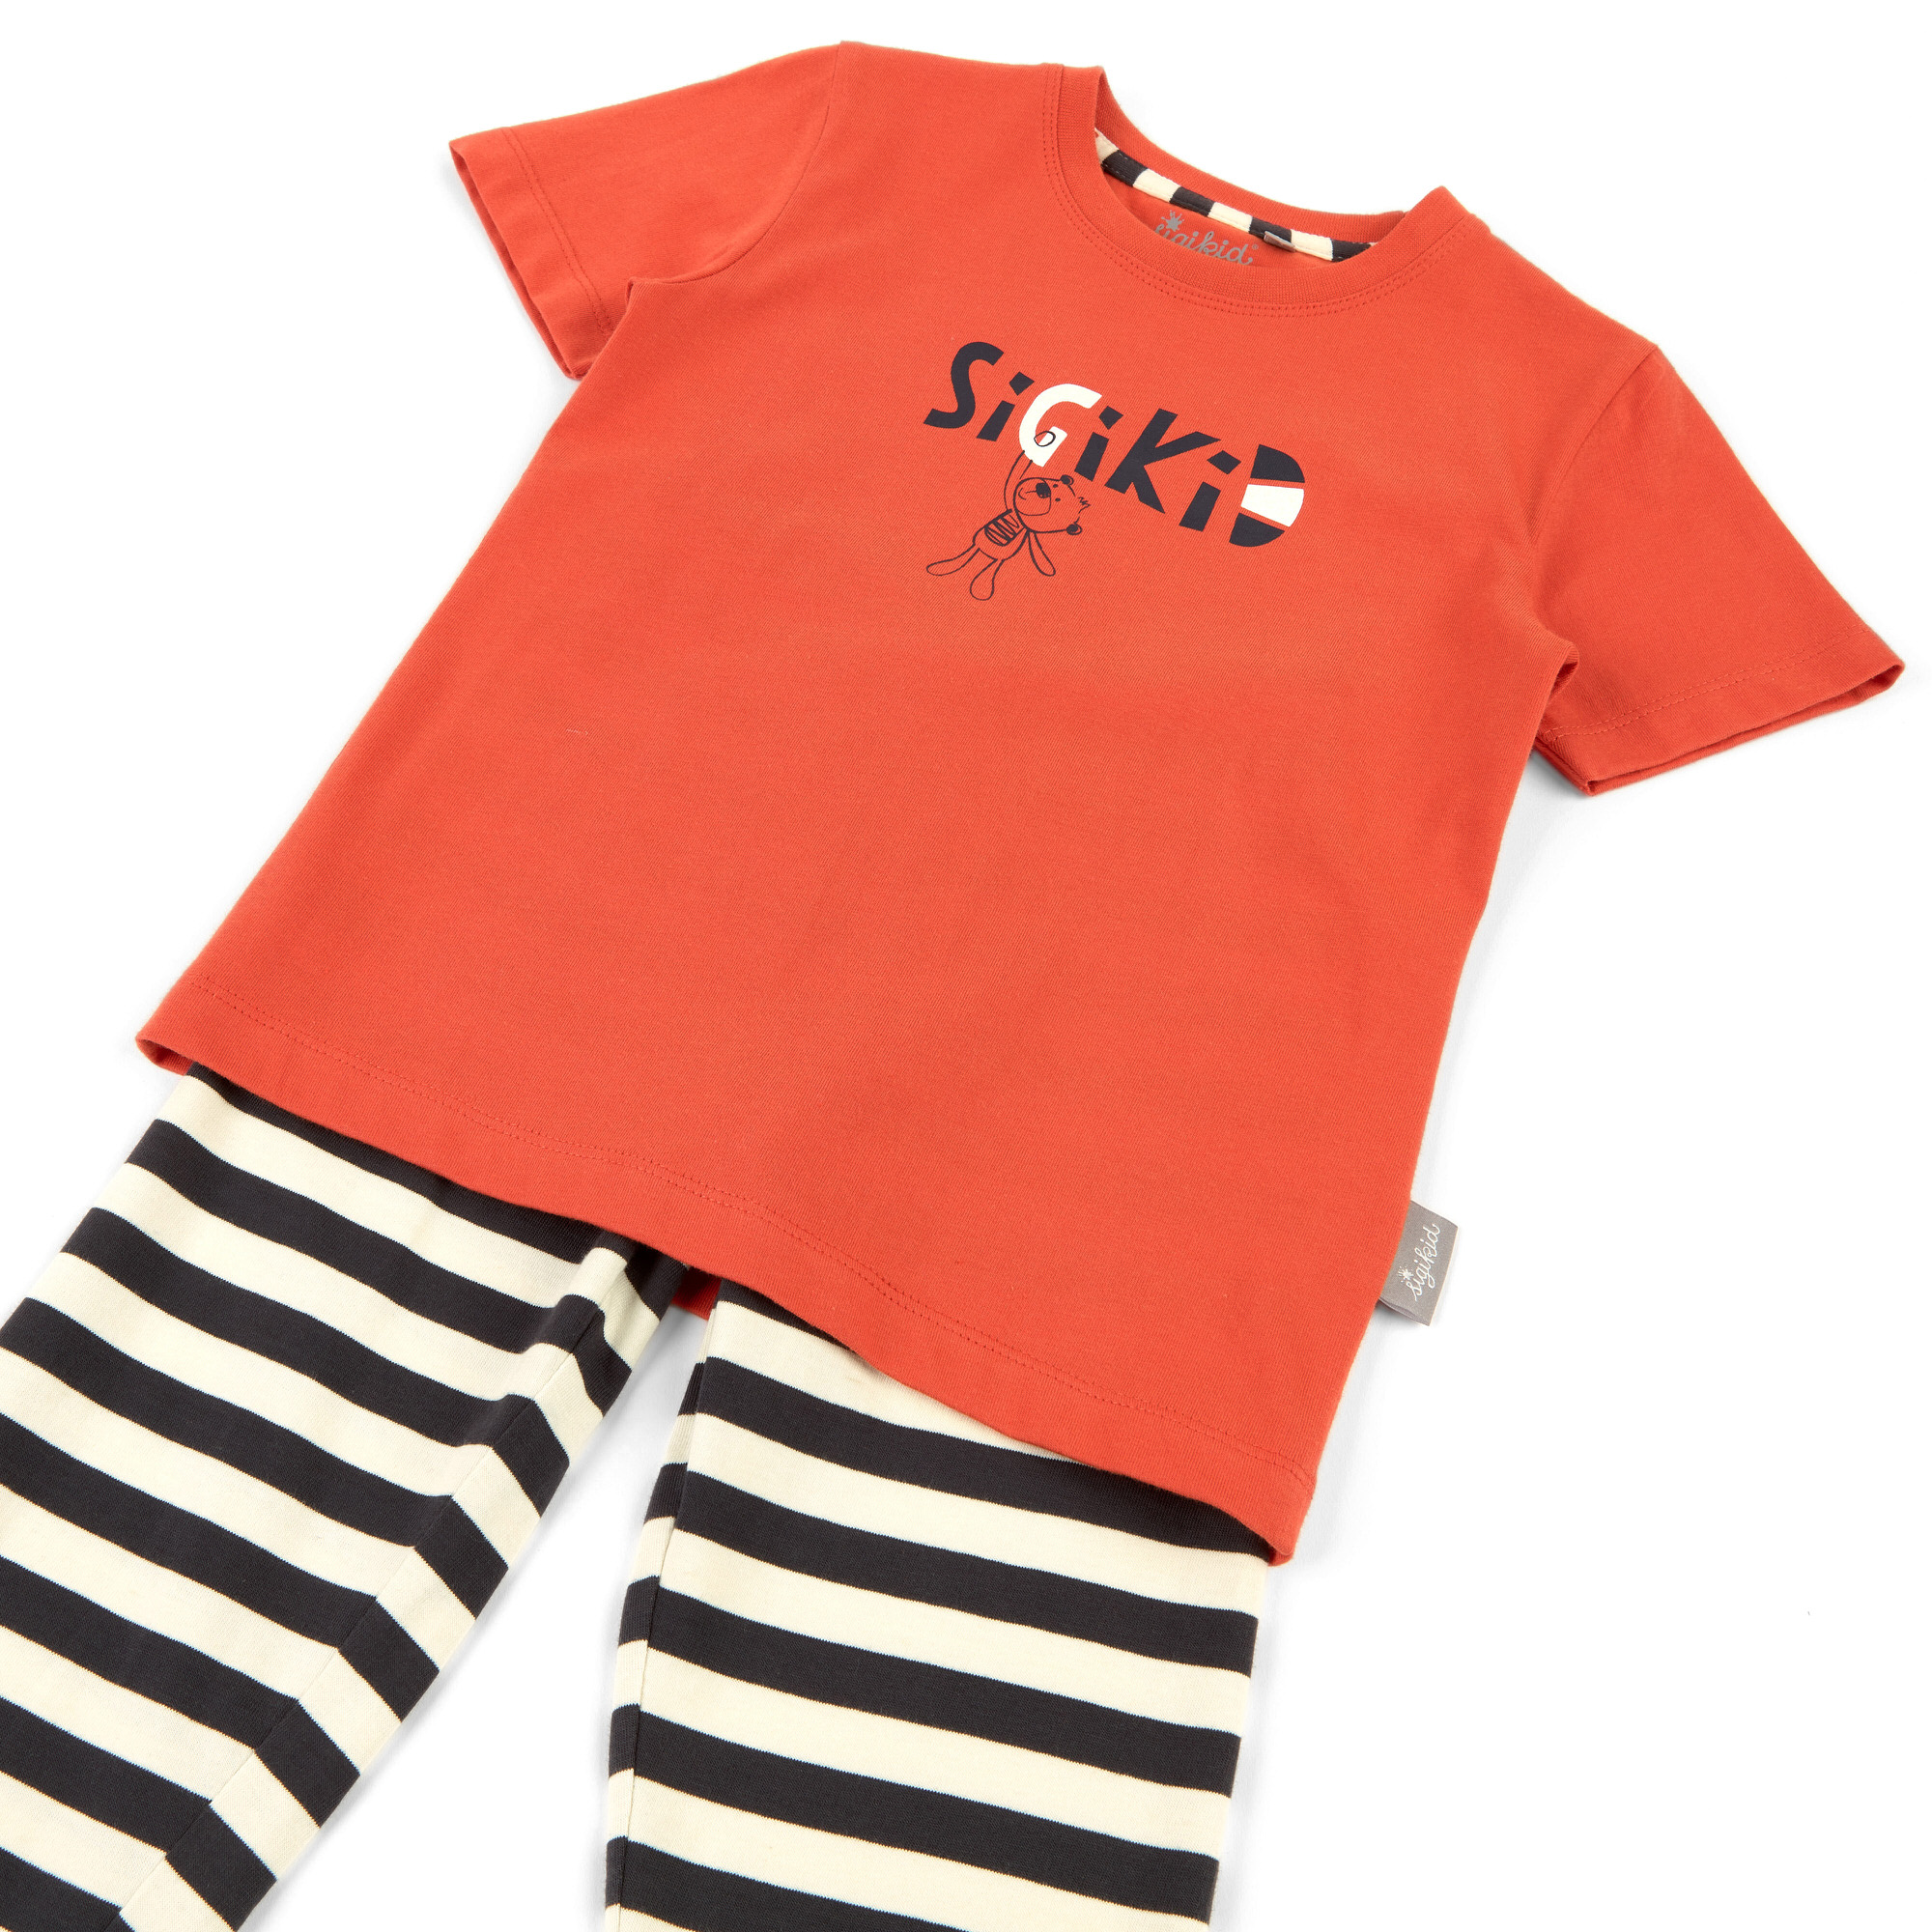 Children's summer pyjamas, red & black/white striped